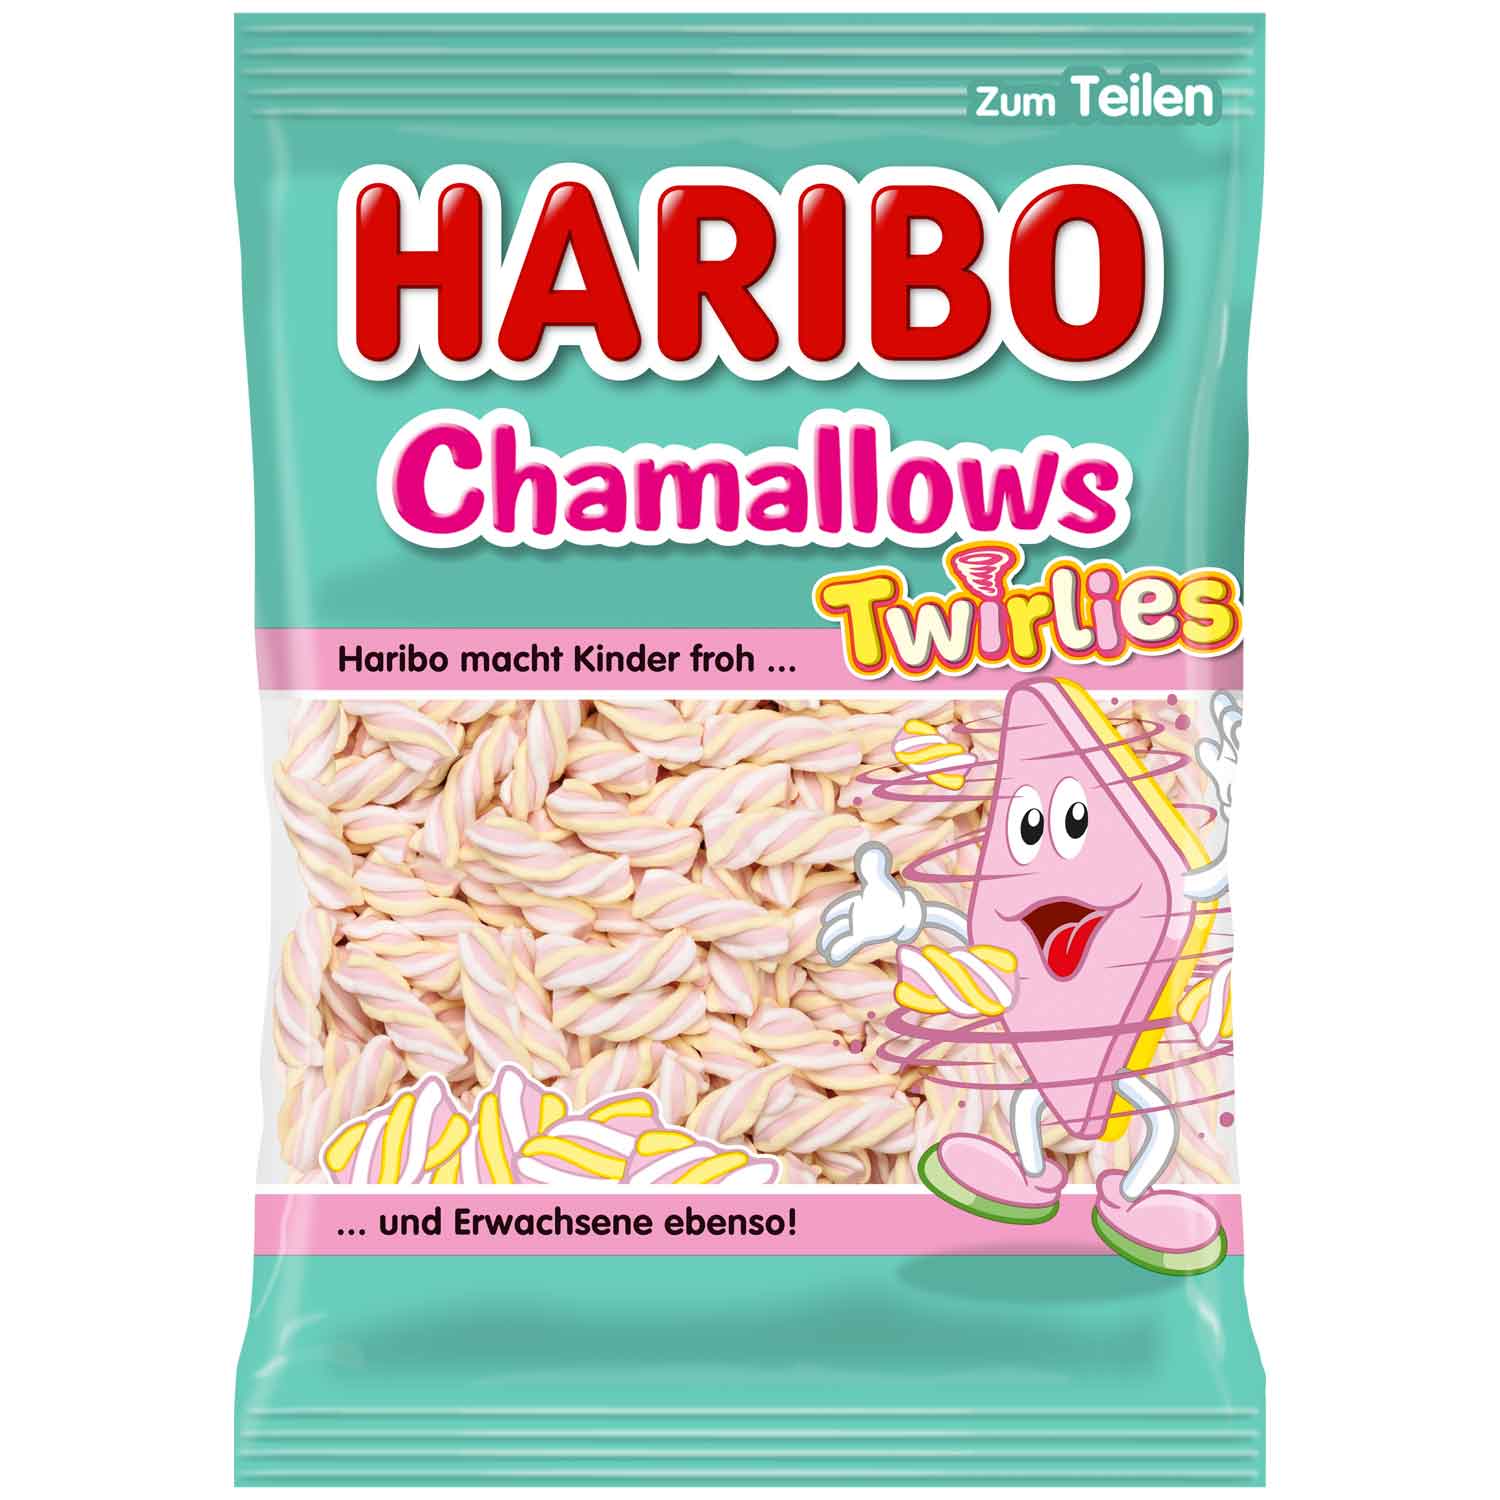 Haribo Chamallows Twirlies 200g (Germany)